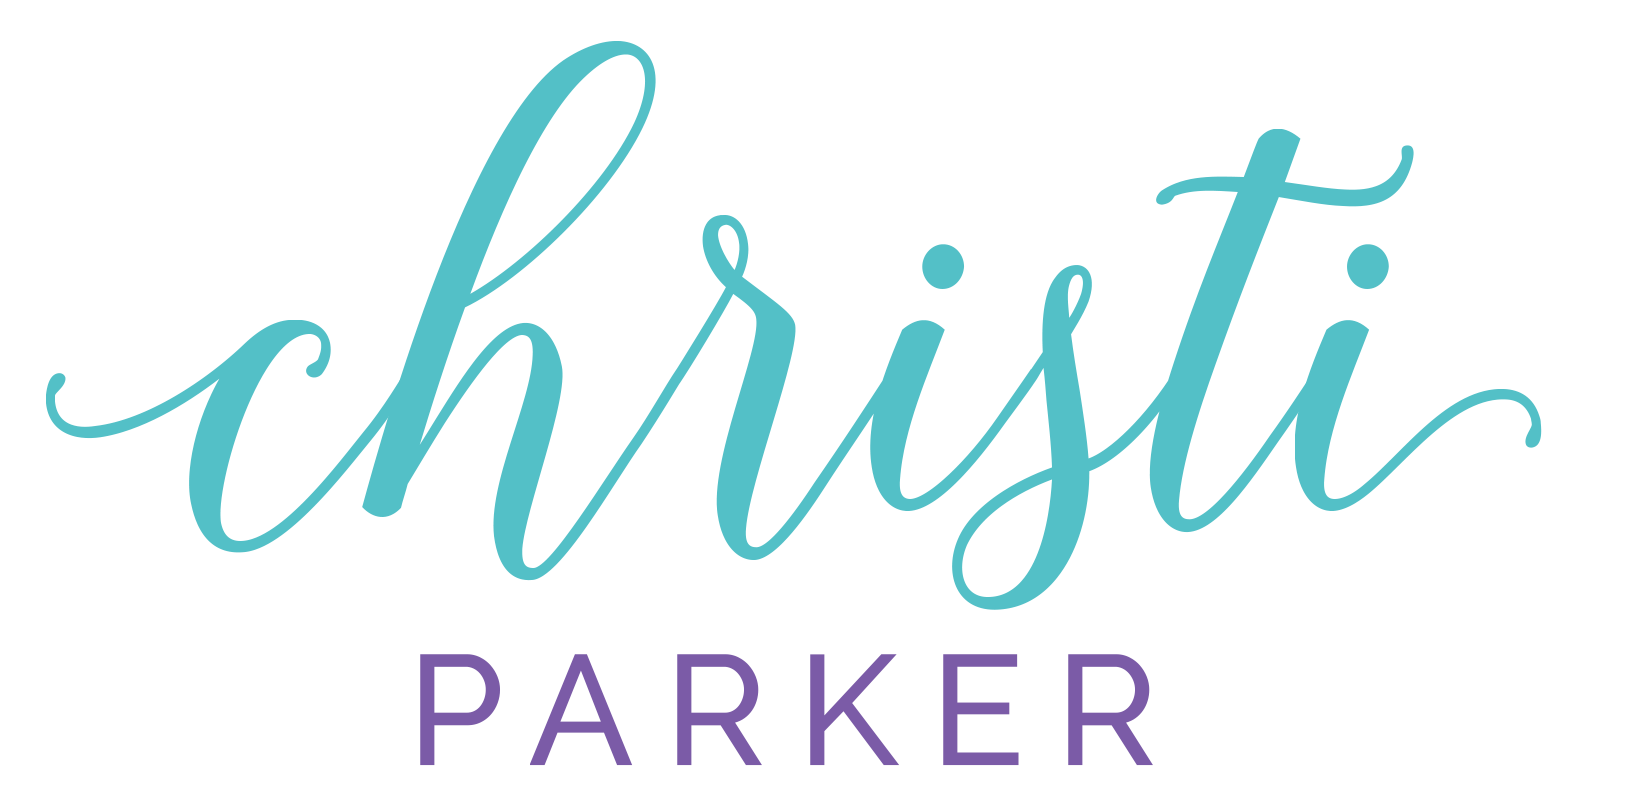 Christi N. Parker